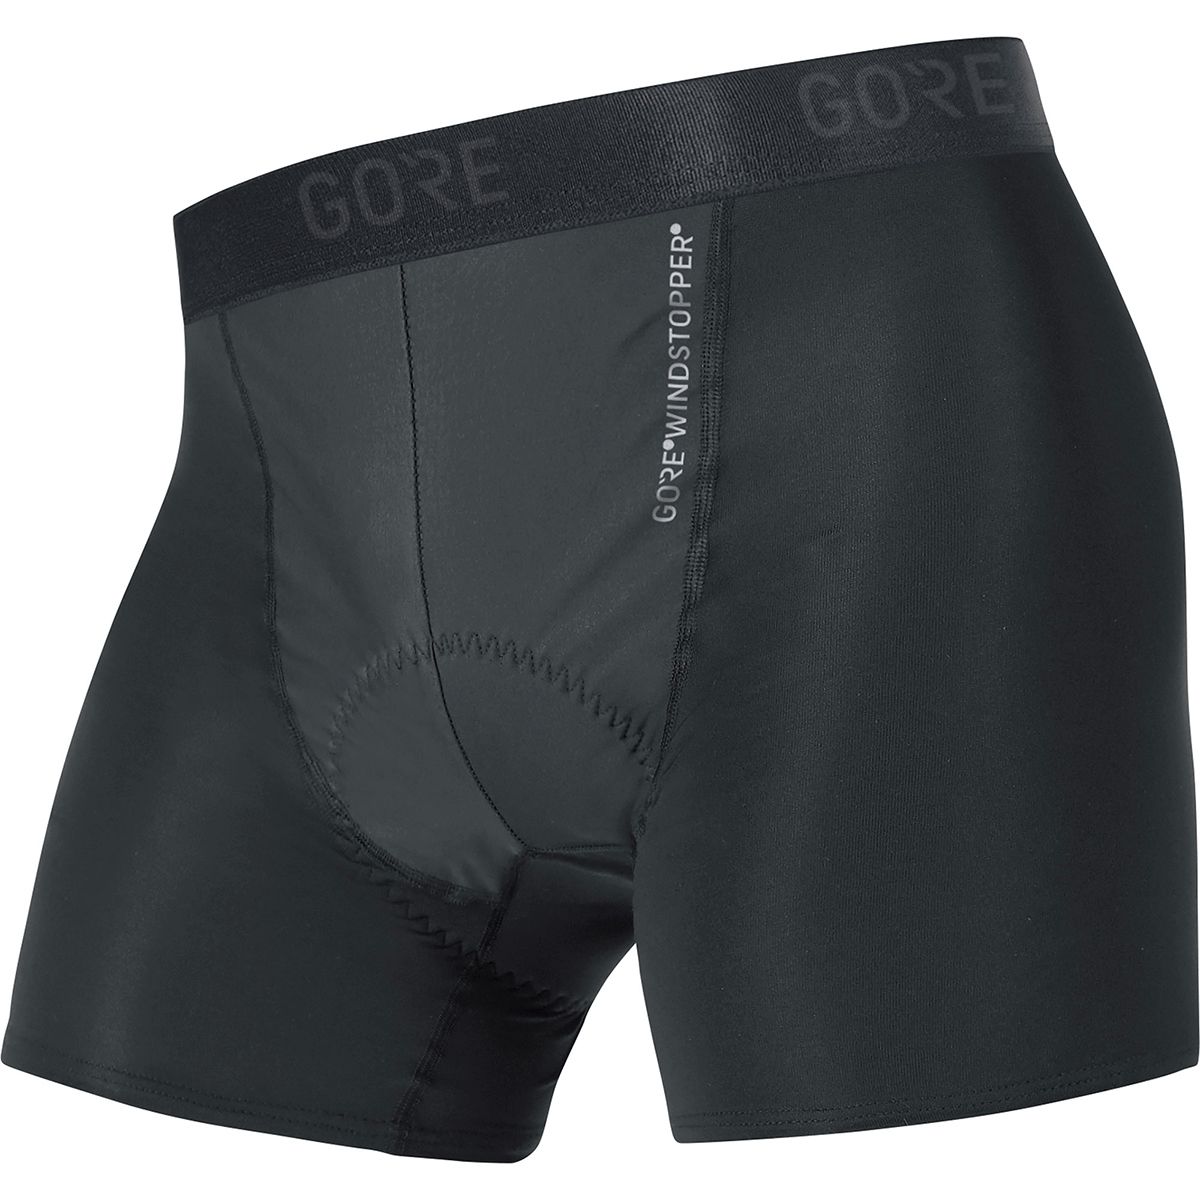 Gore Wear C3 Gore Windstopper Base Layer Boxer Shorts+ - Men's